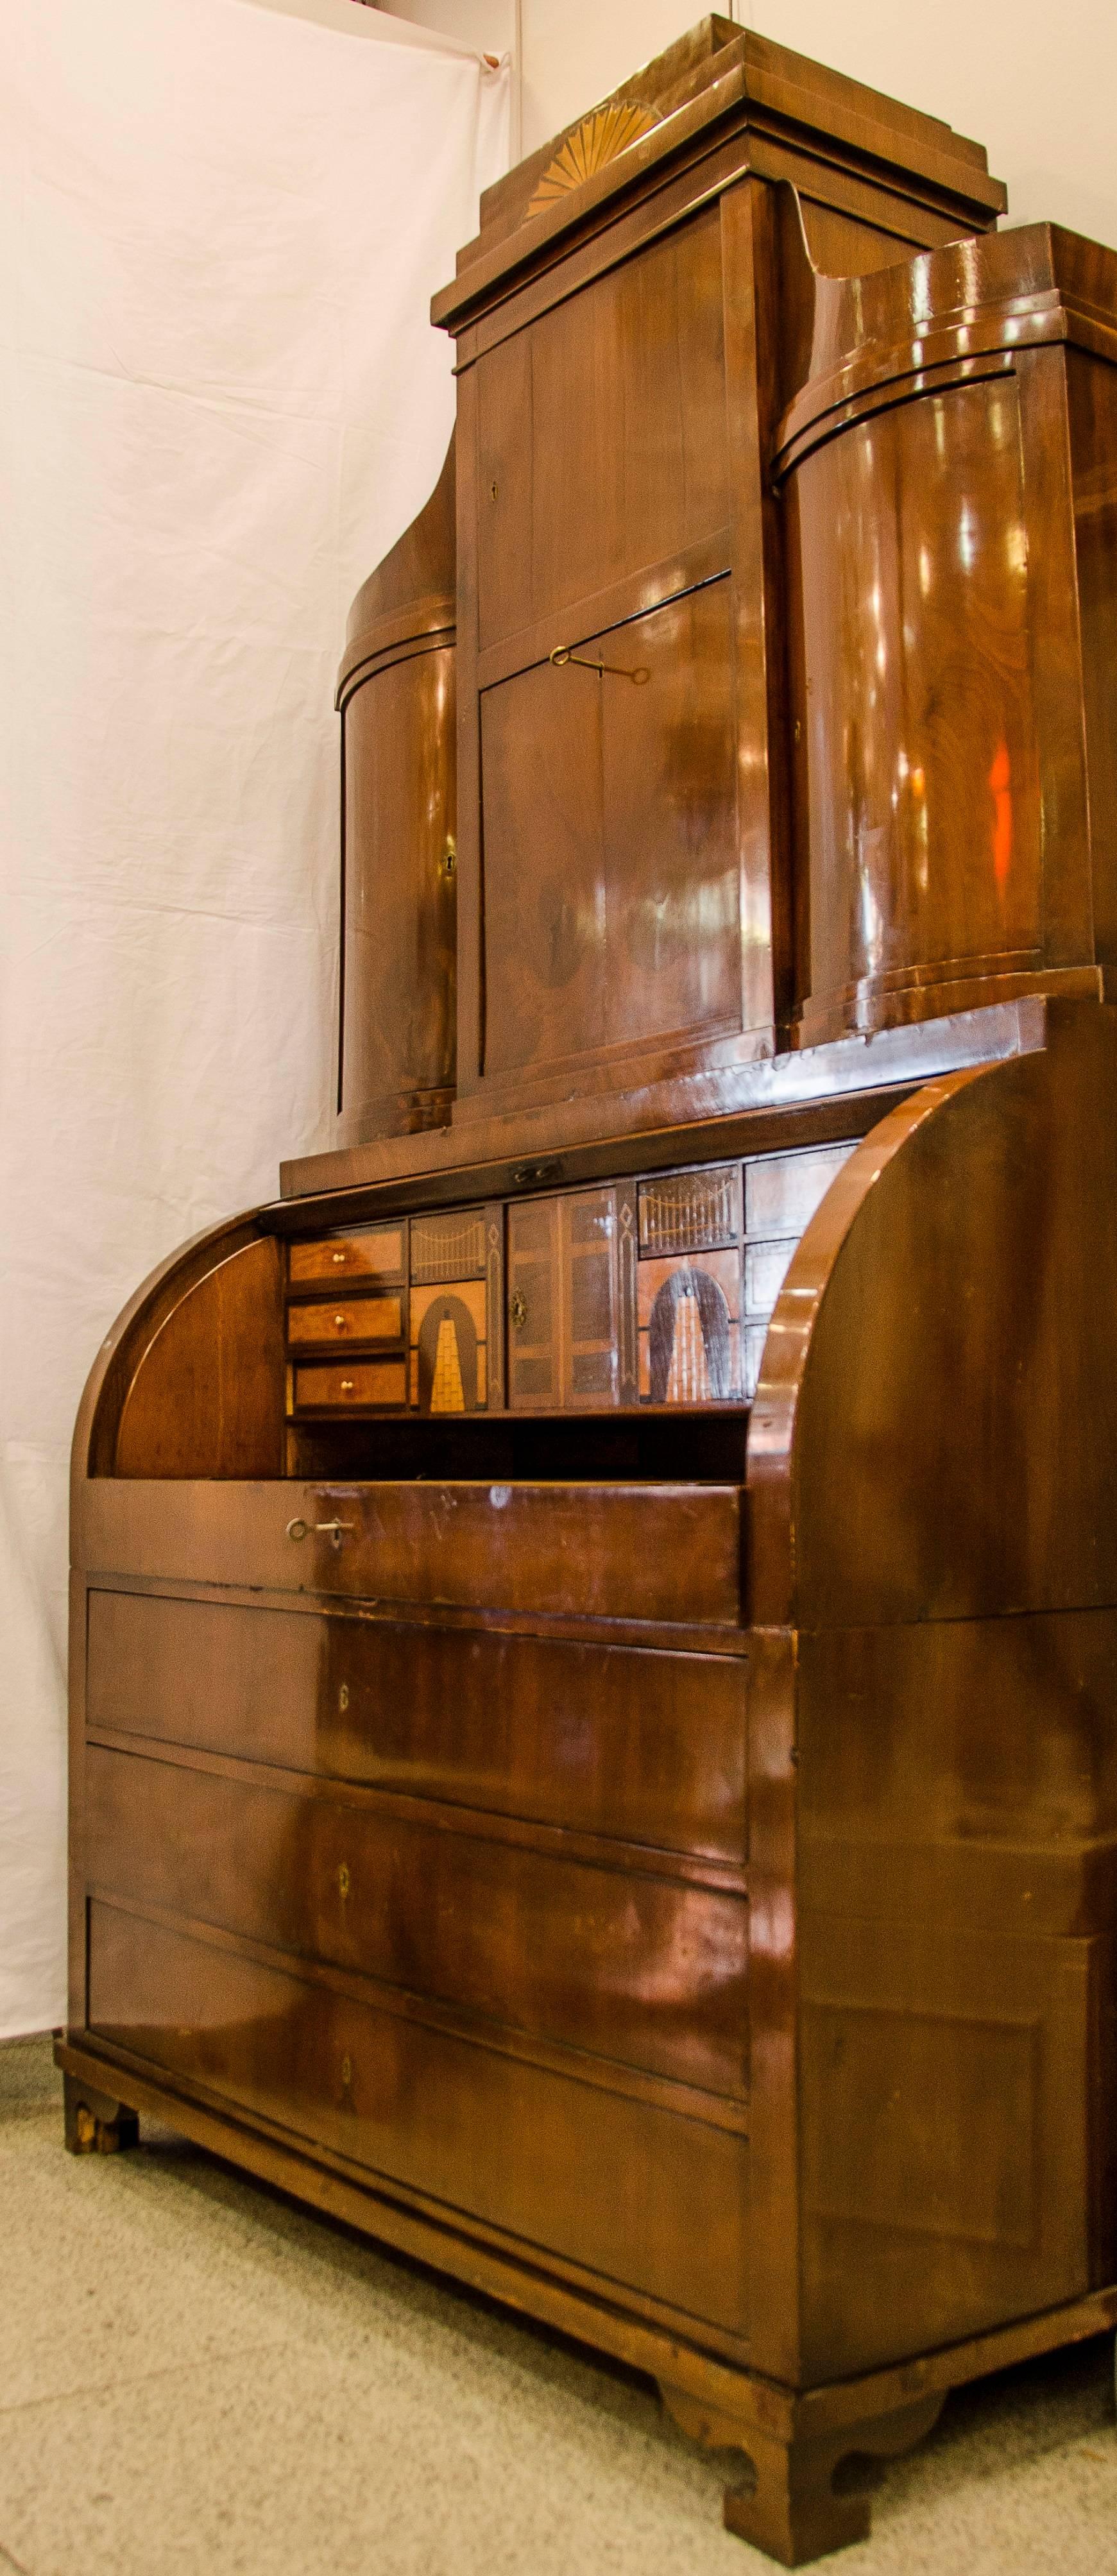 Bureau-bookcase in mahogany wood, lemongrass wood inside. Different drawers inside the bureau.